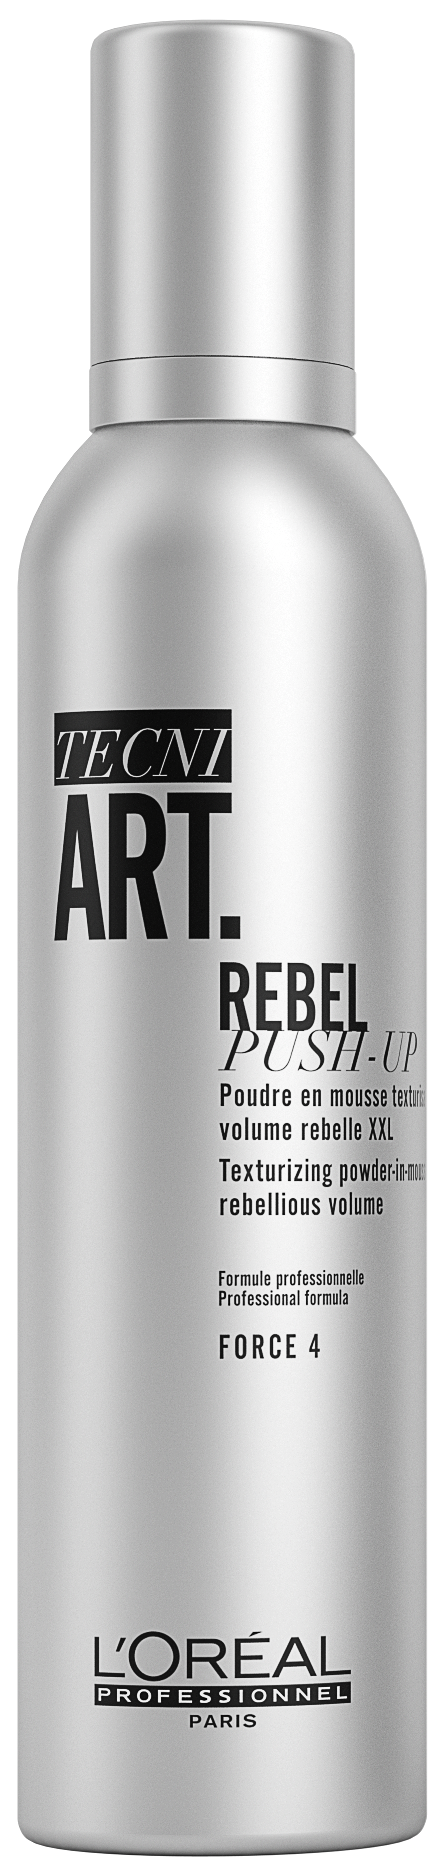 Tecni art Rebel Push up 250 ml